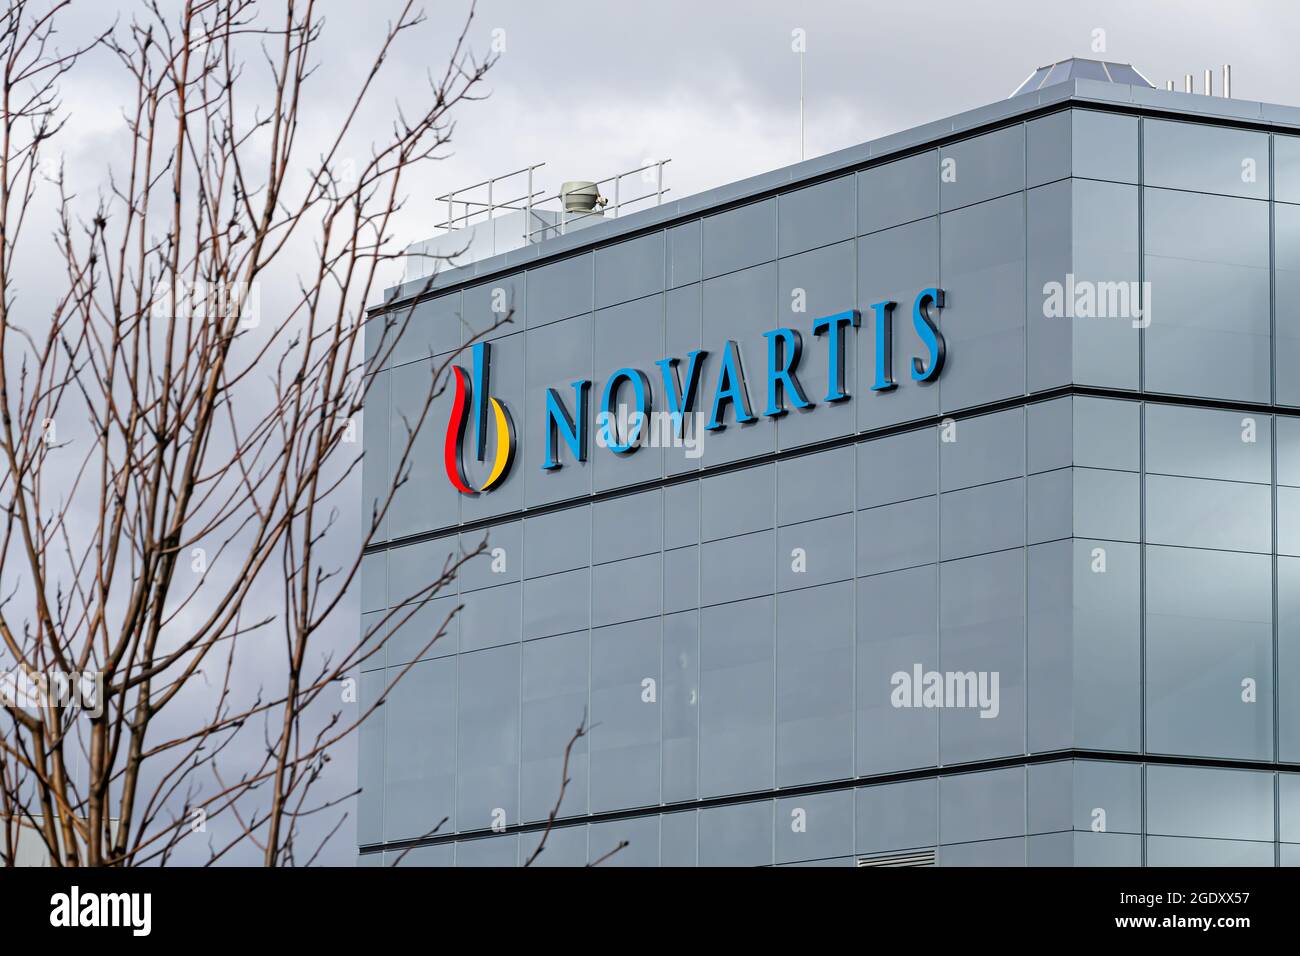 Novartis Pharma Stein Ag Stockfotos und -bilder Kaufen - Alamy